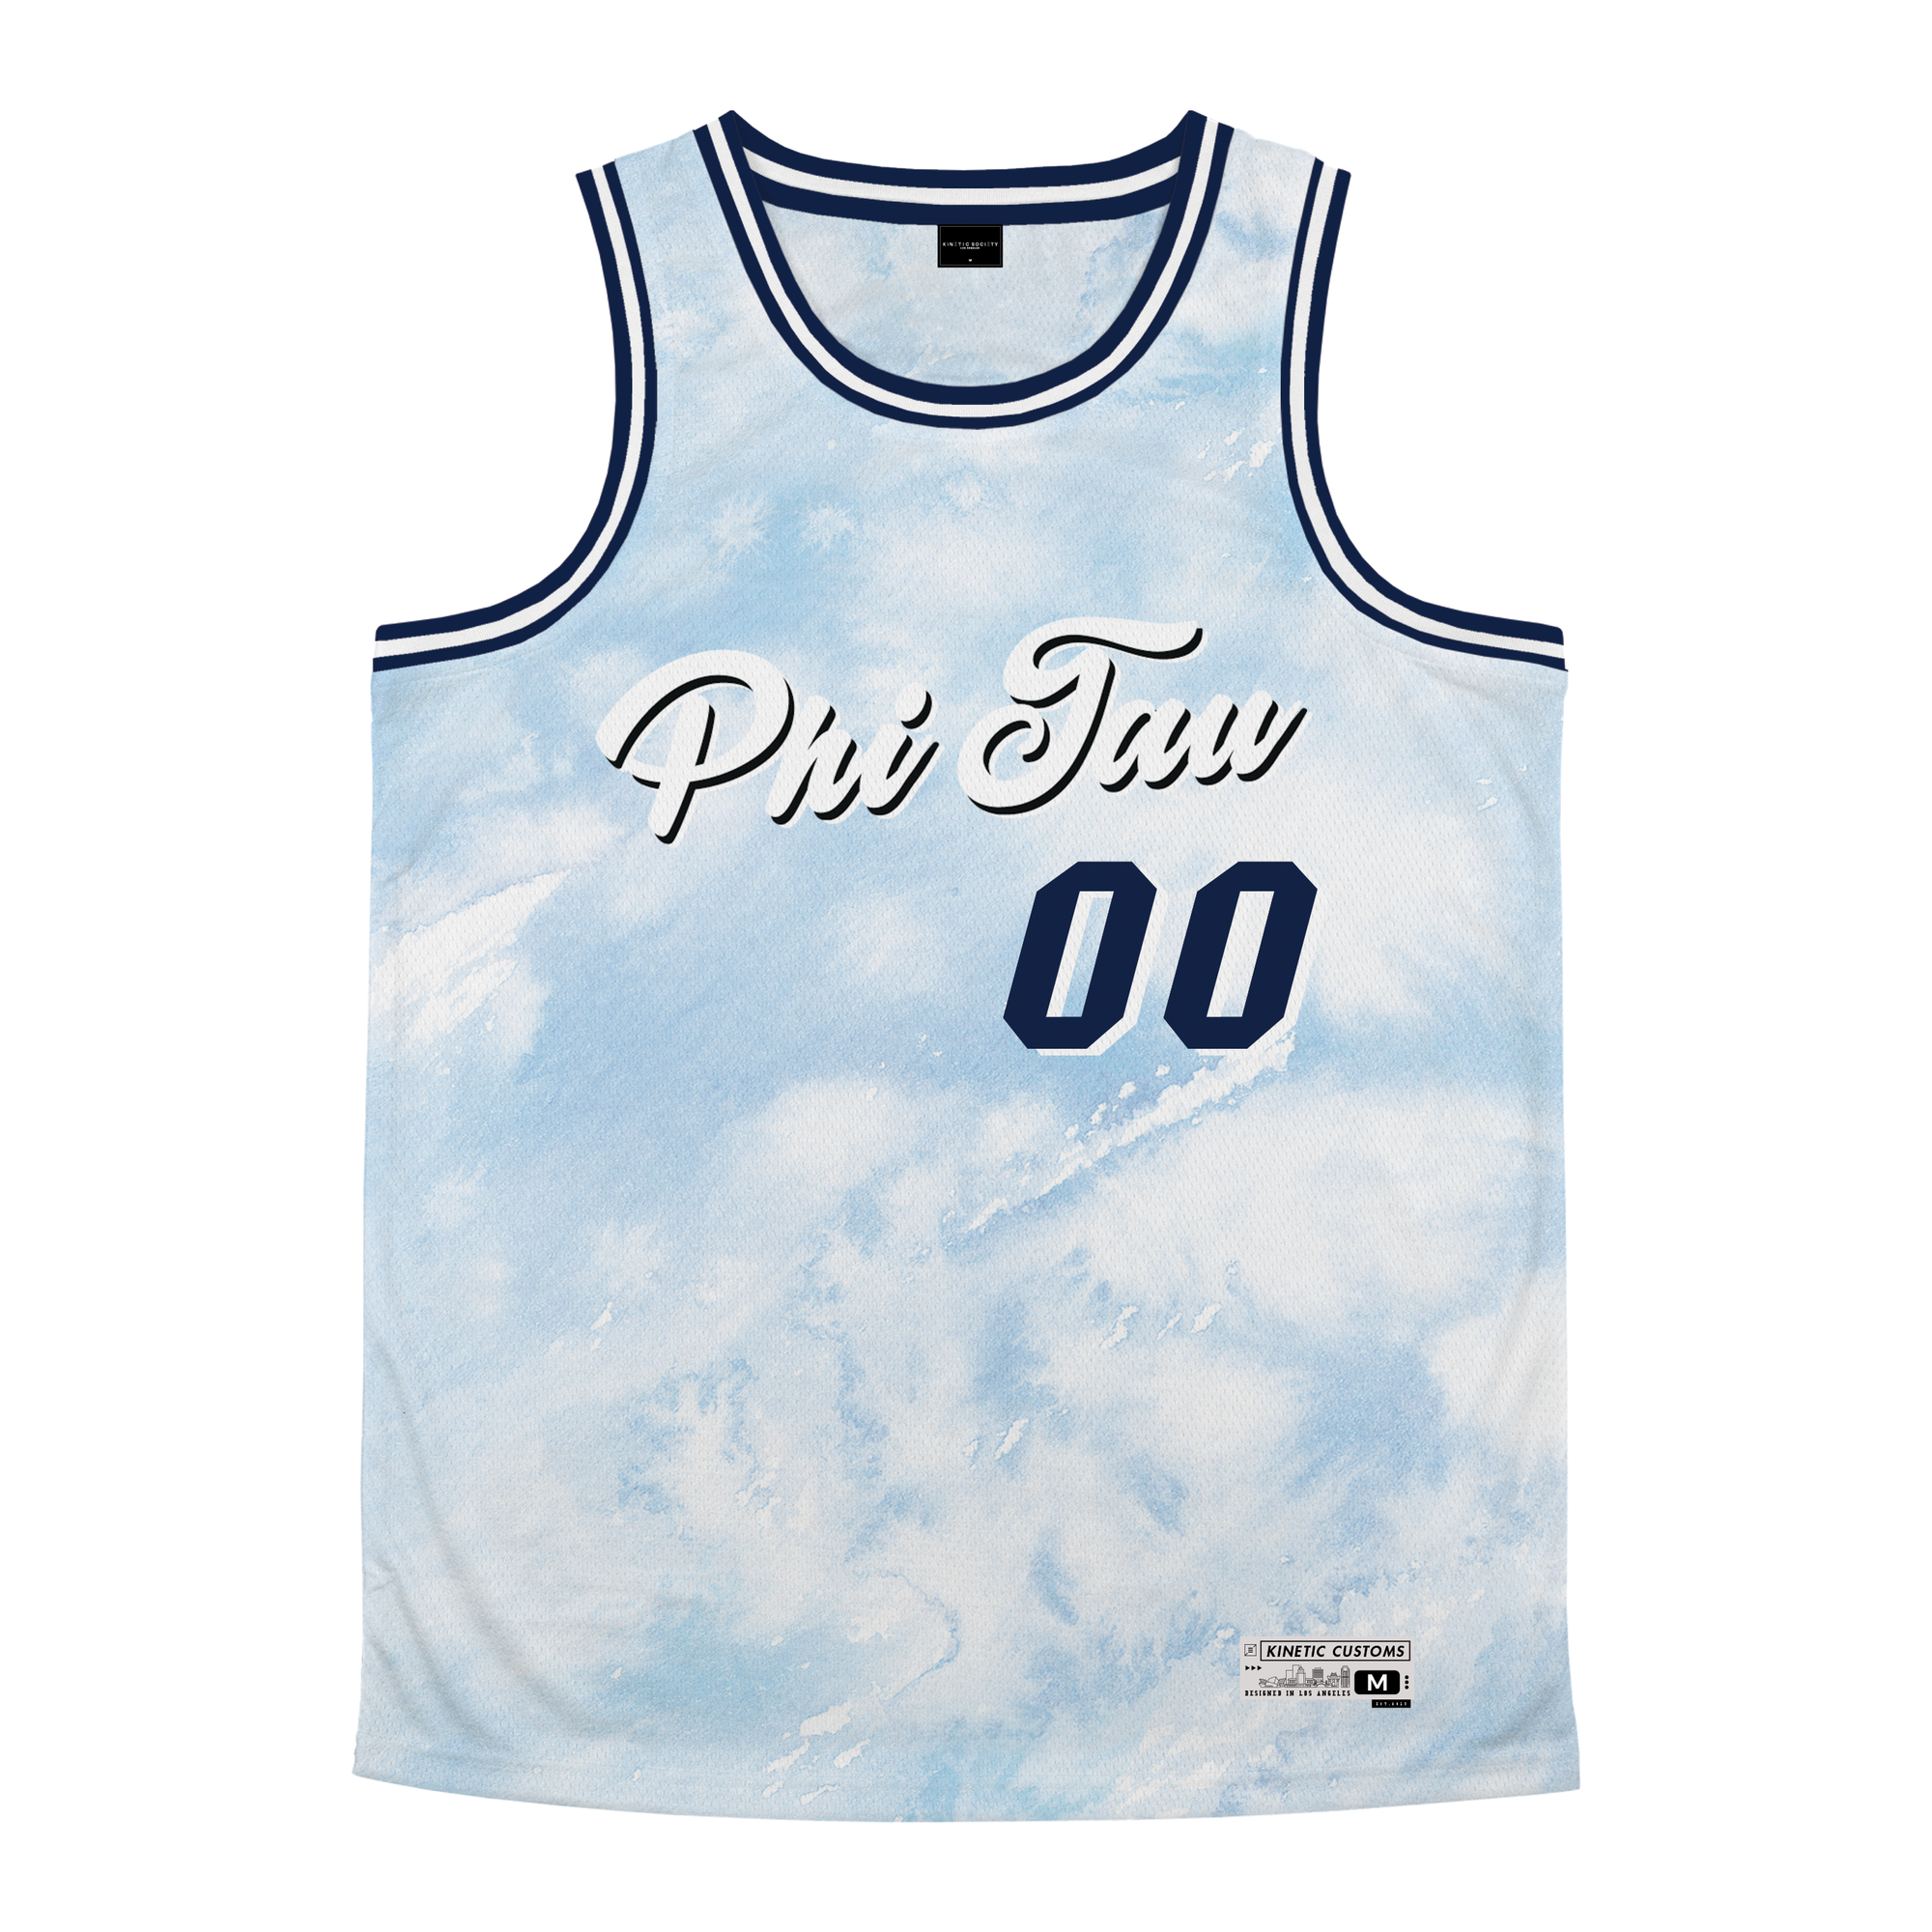 Phi Kappa Tau - Blue Sky Basketball Jersey